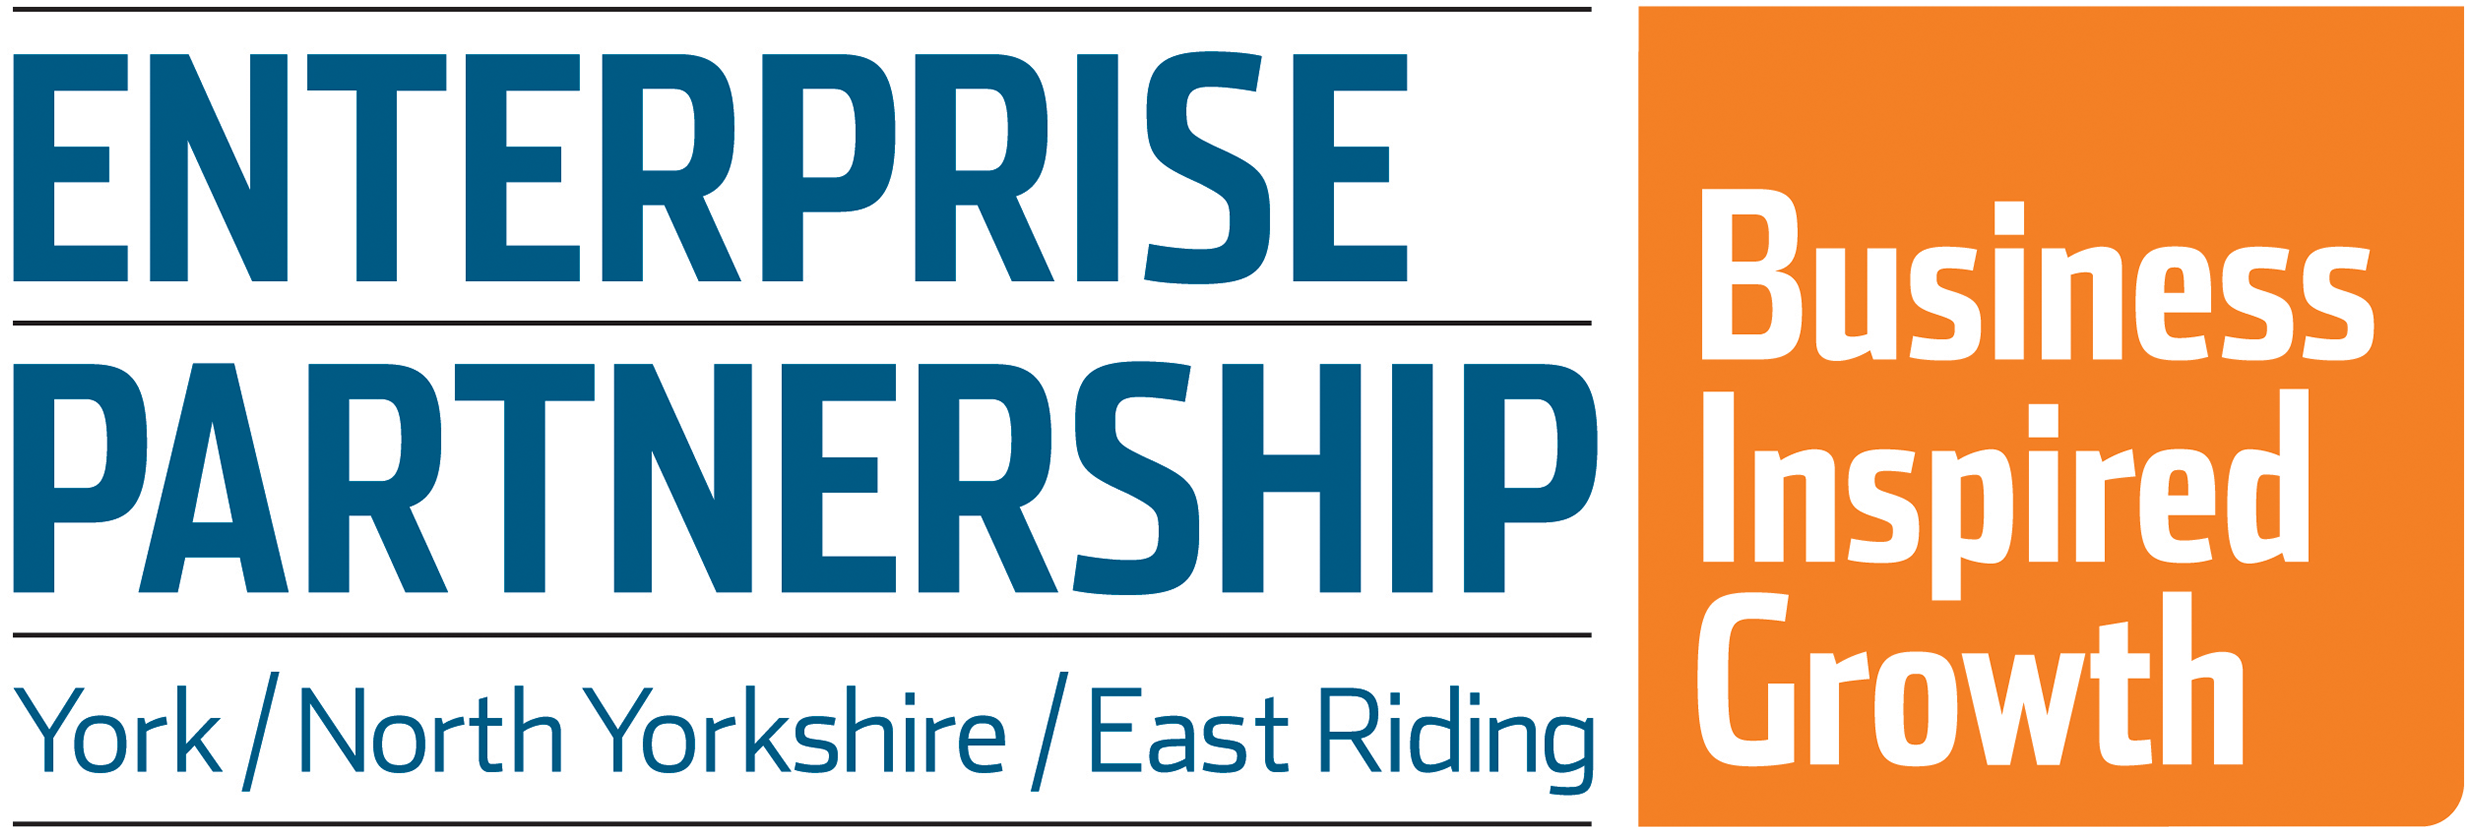 Enterprise Partnership York, North Yorkshire and East Riding logo